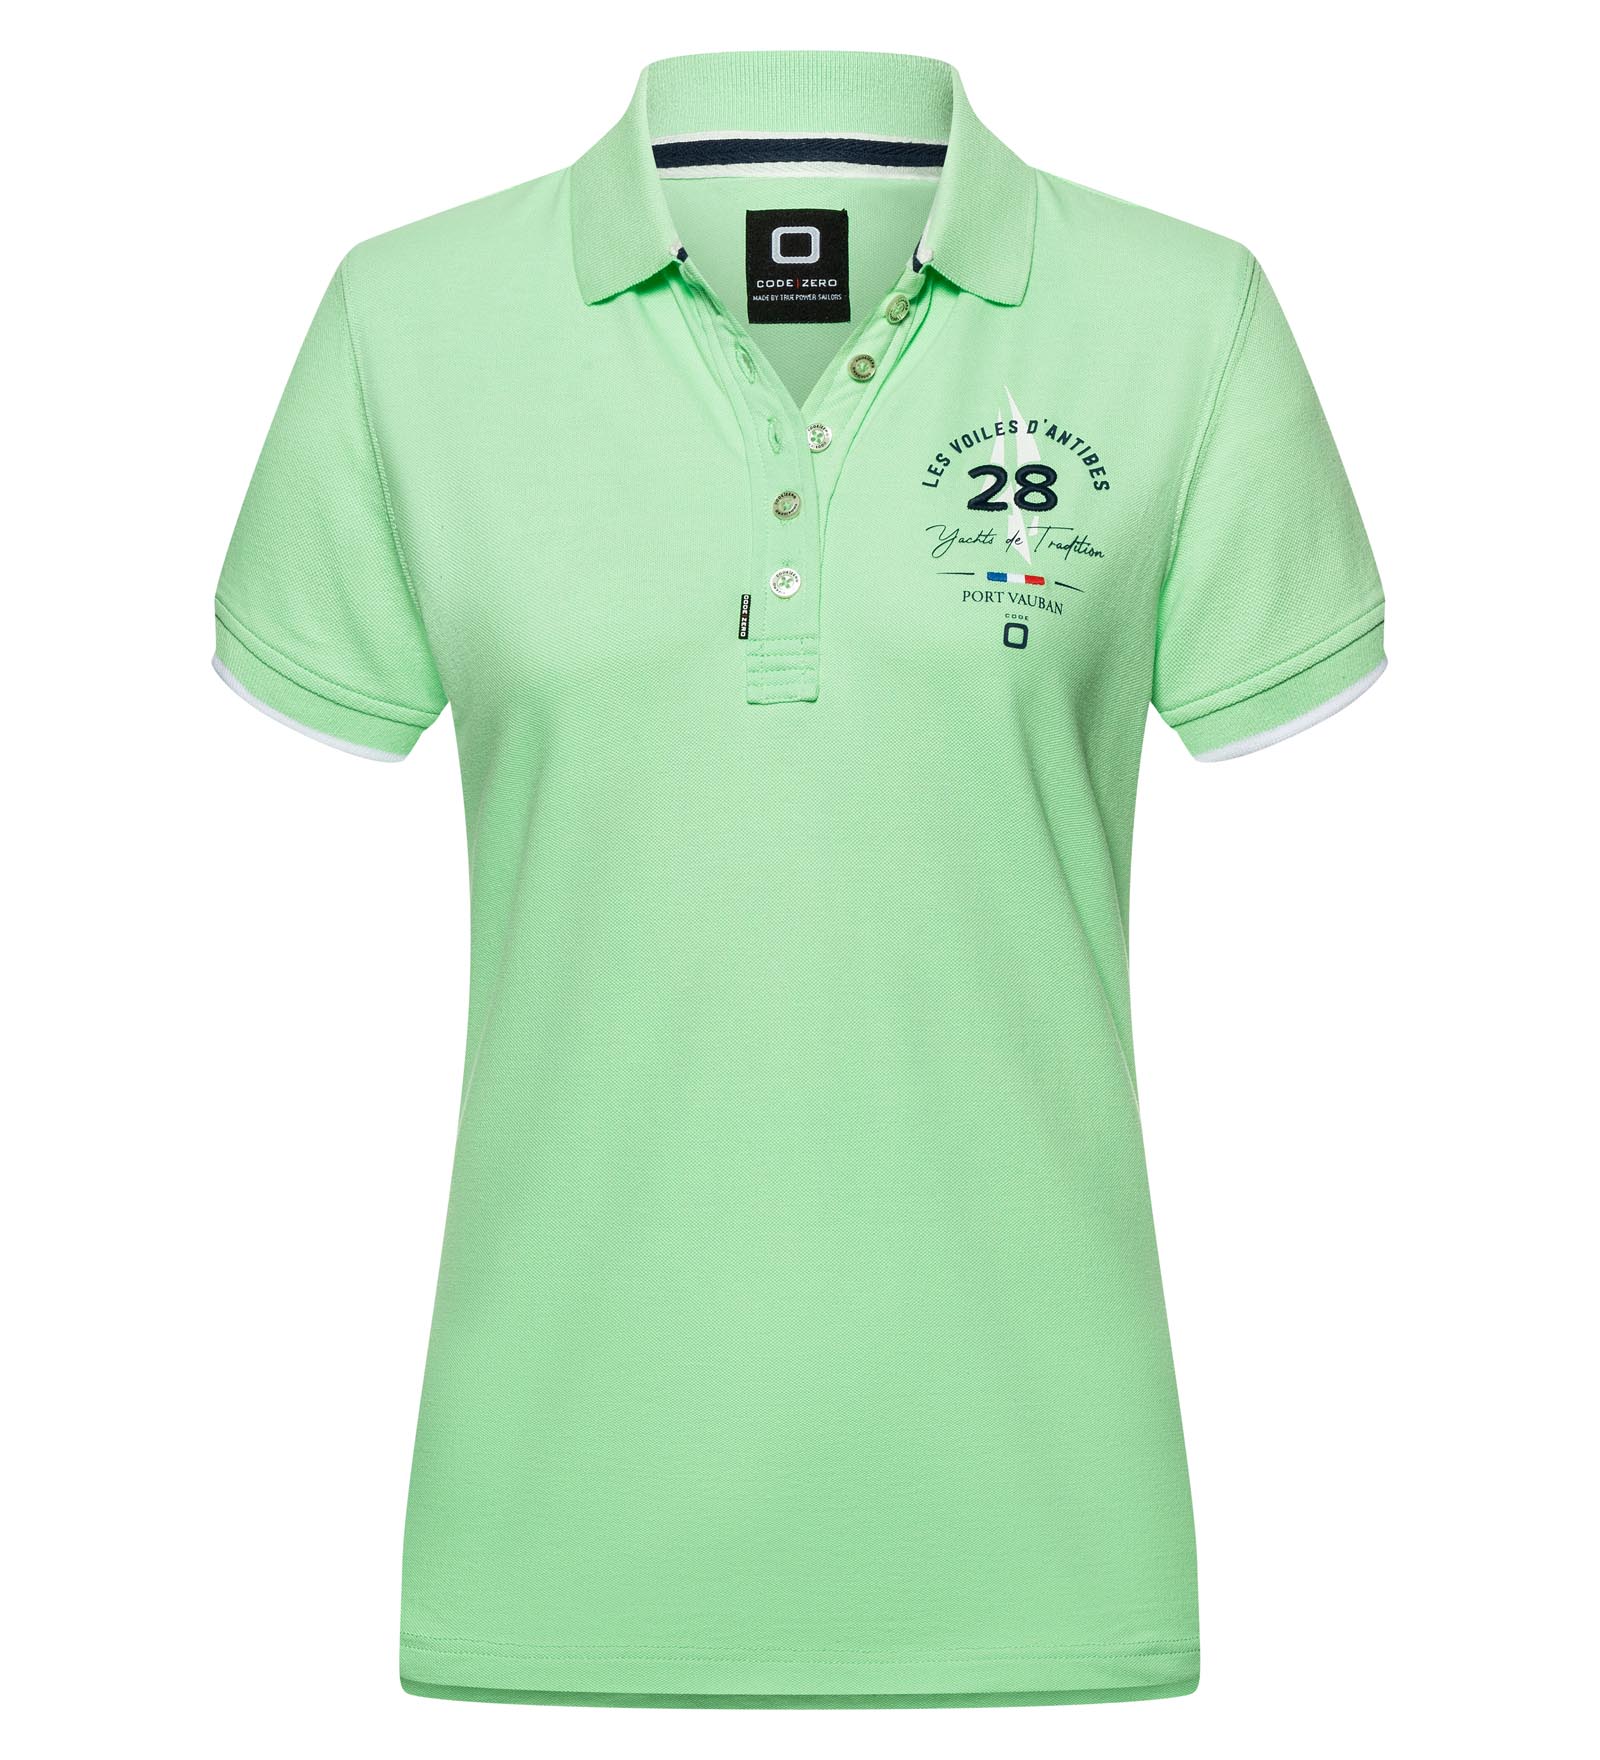 Poloshirt Damen Tradition grün S Les Voiles d'Antibes von Les Voiles d'Antibes